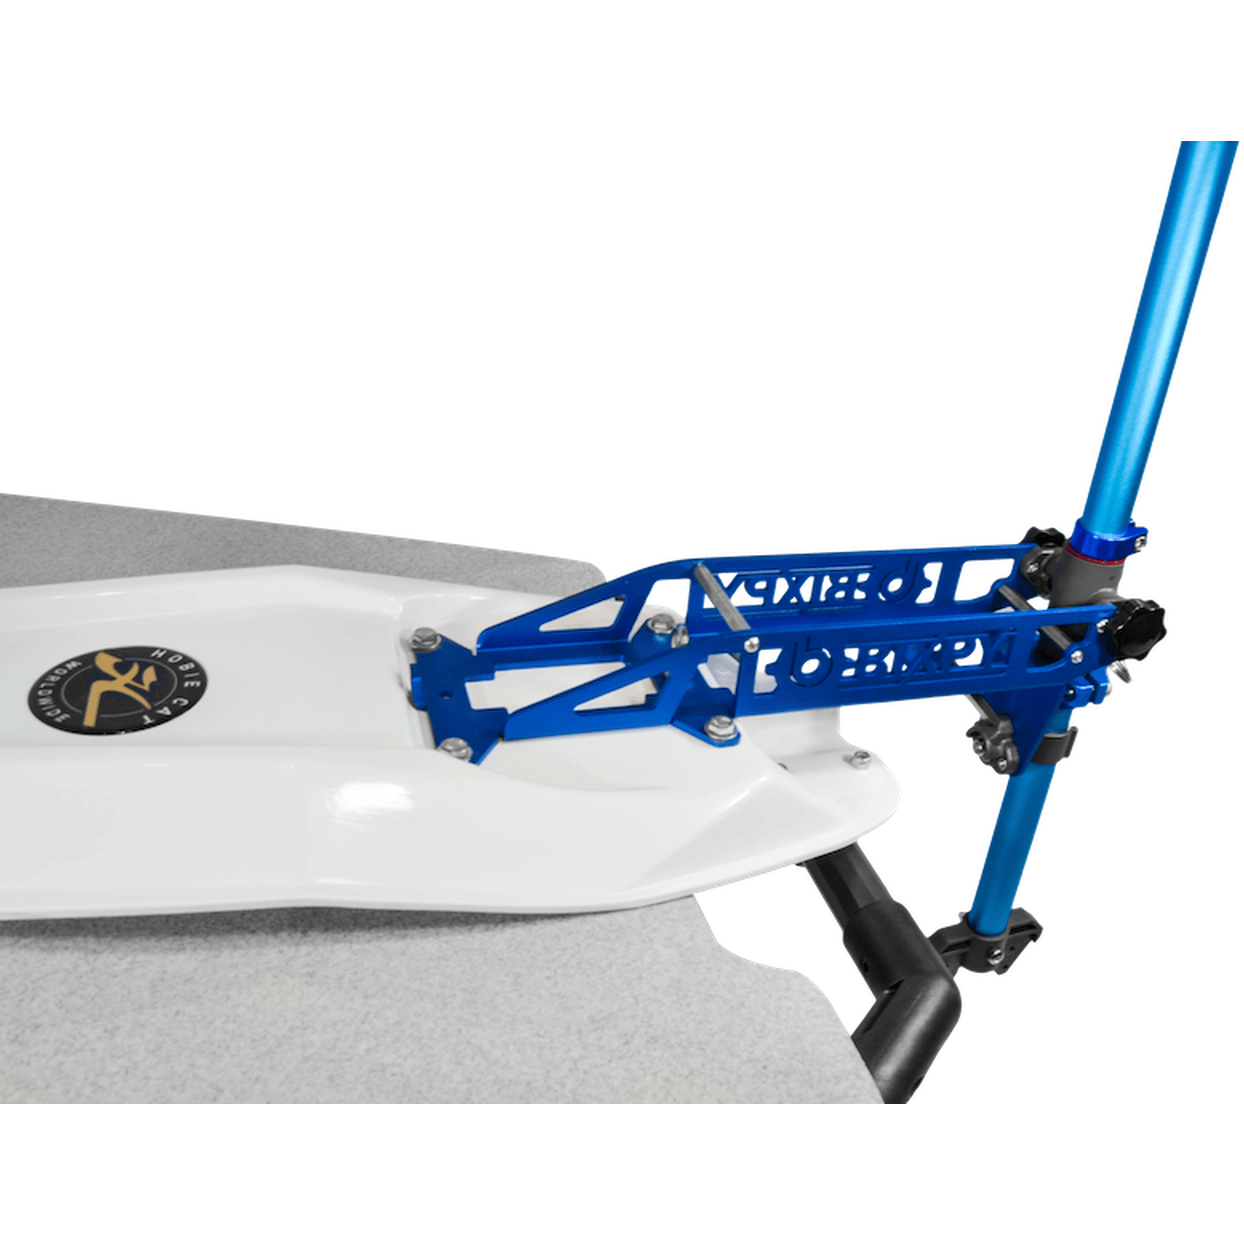 Bixpy Hobie Pro Angler with Hobie Plate For J-2 Motor AT-PPP-2104